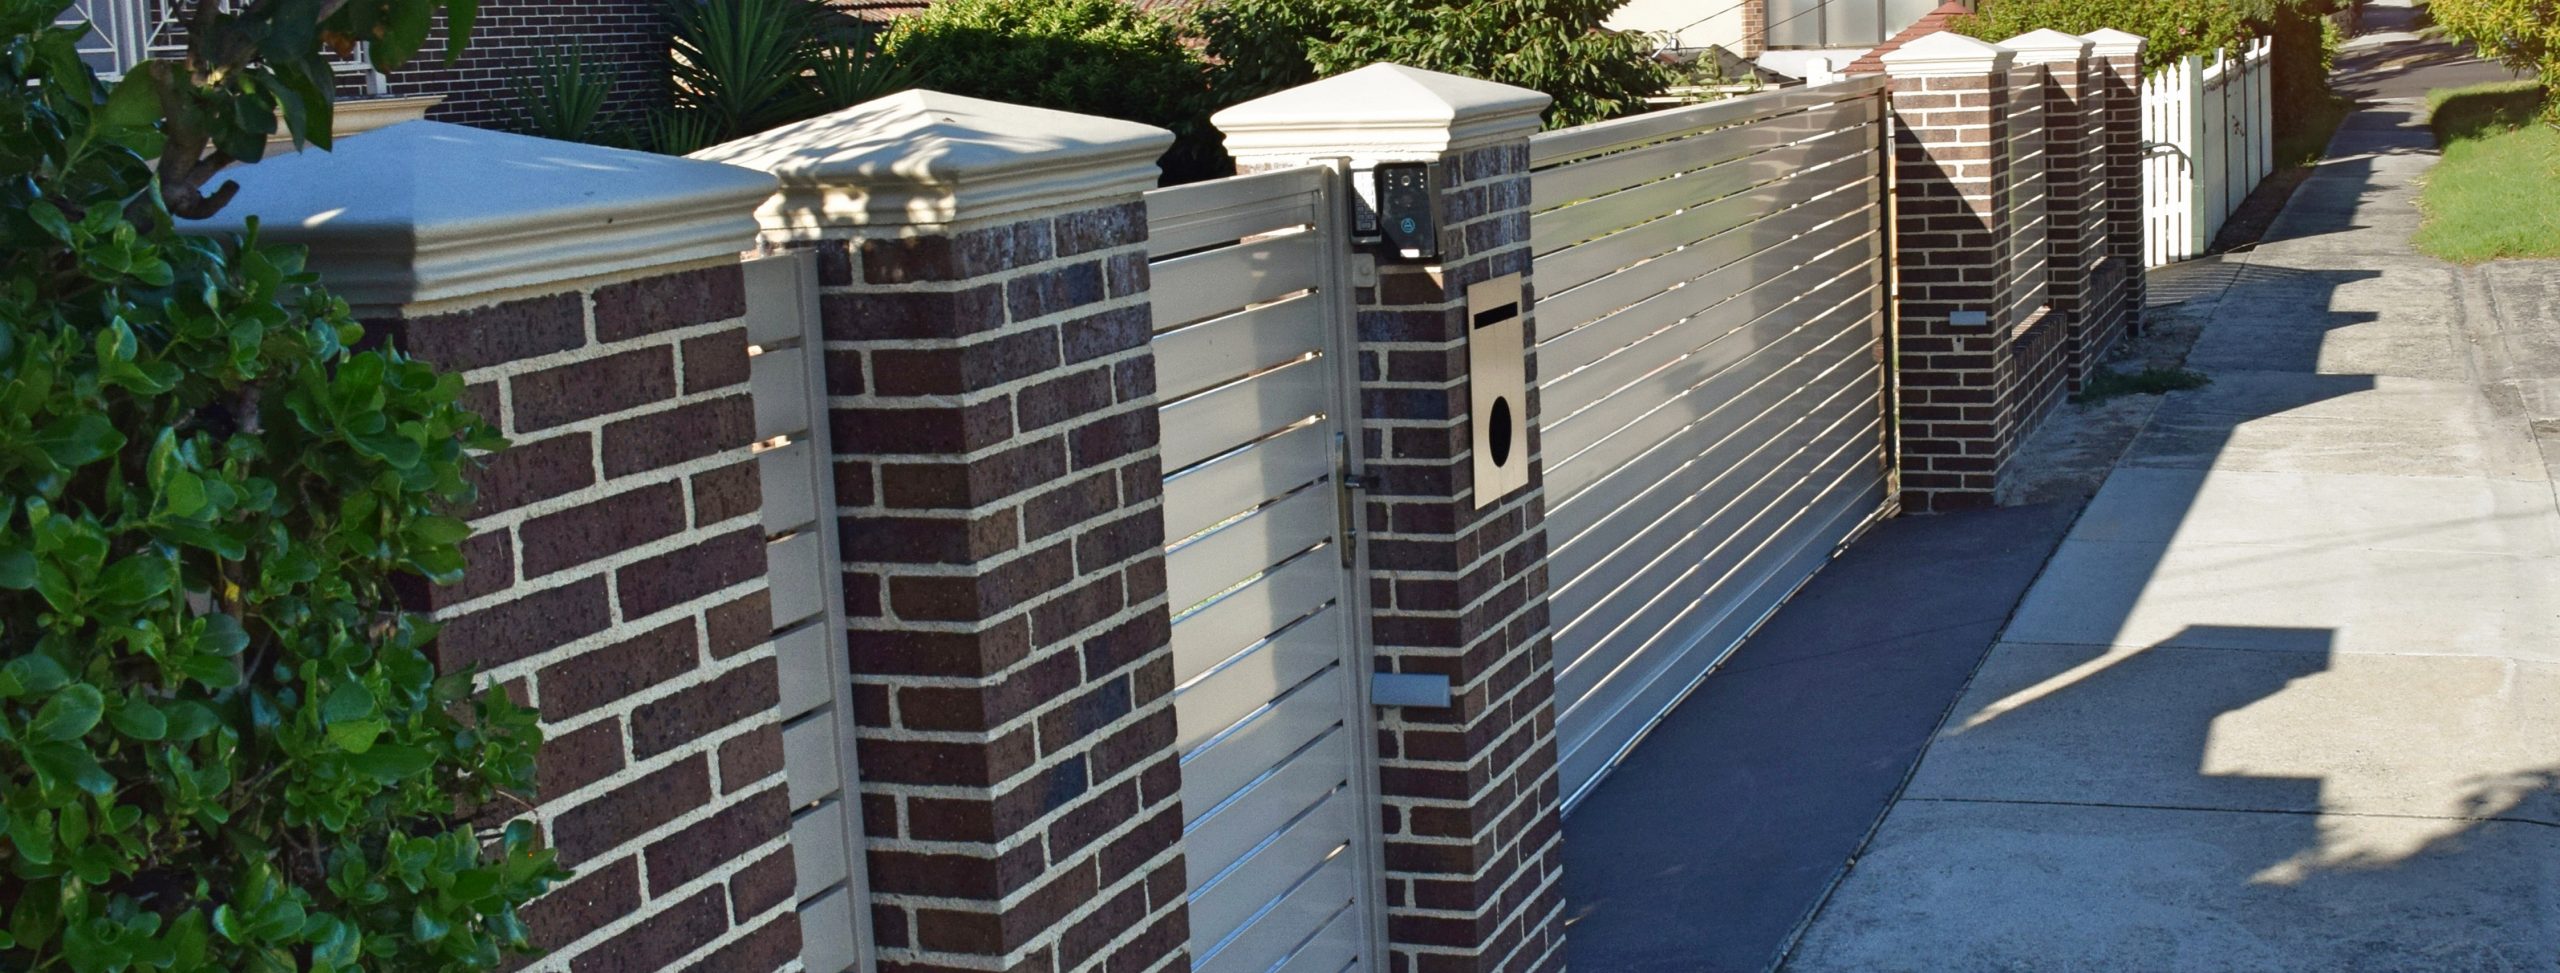 Brow brick pillar fence with aluminium infill panels designed and built by Custom Built Fences